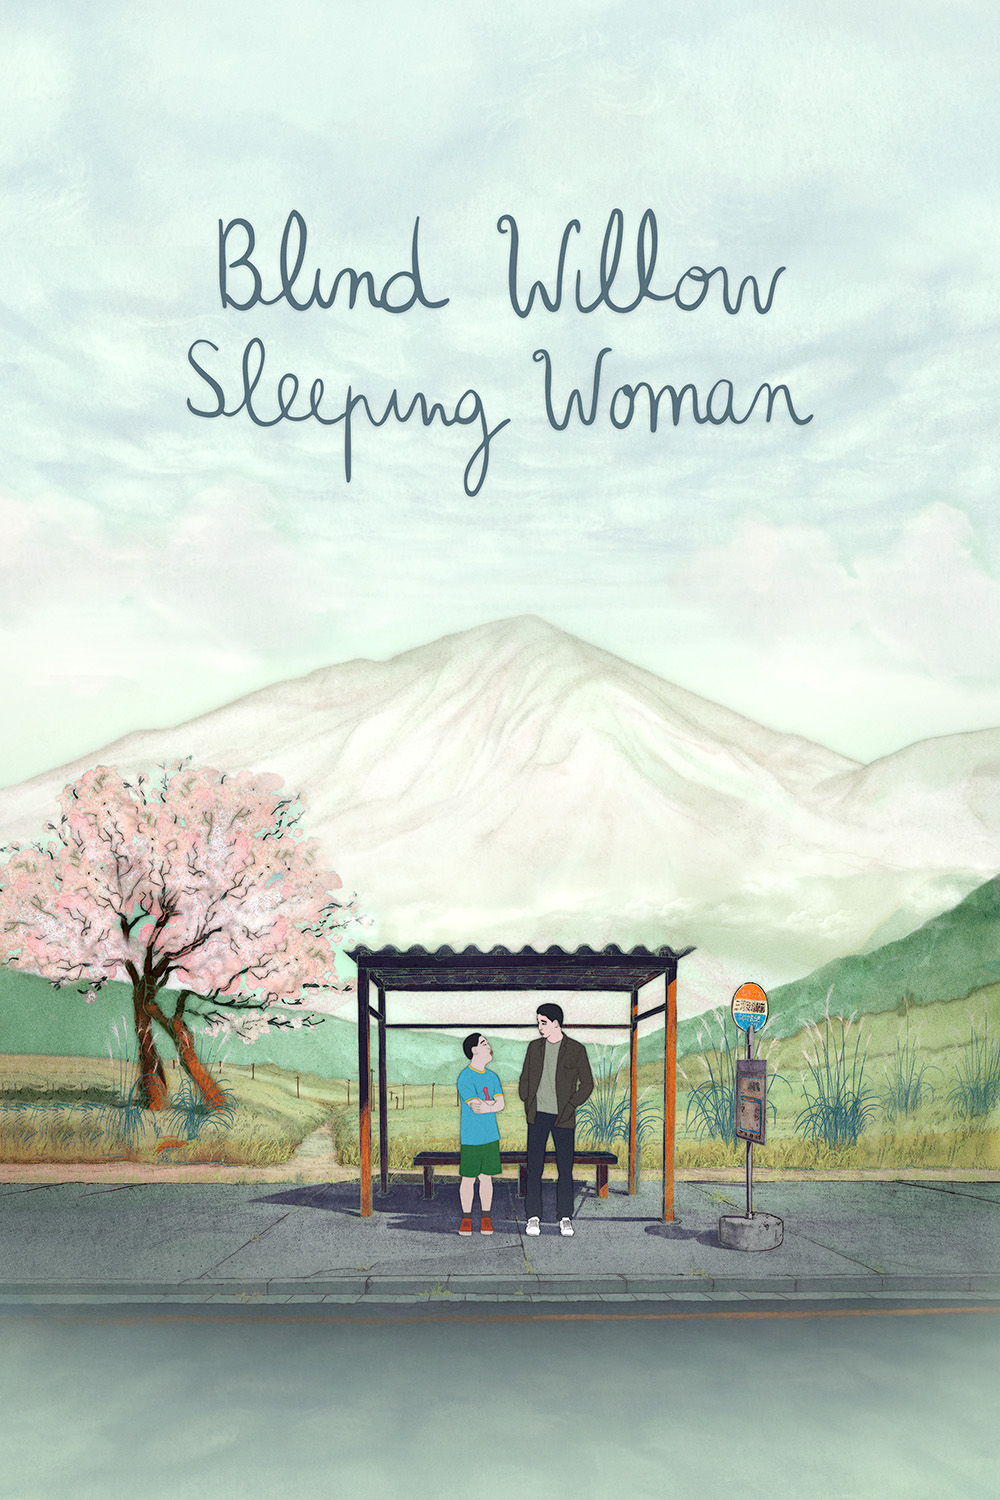 Blind willow sleeping woman